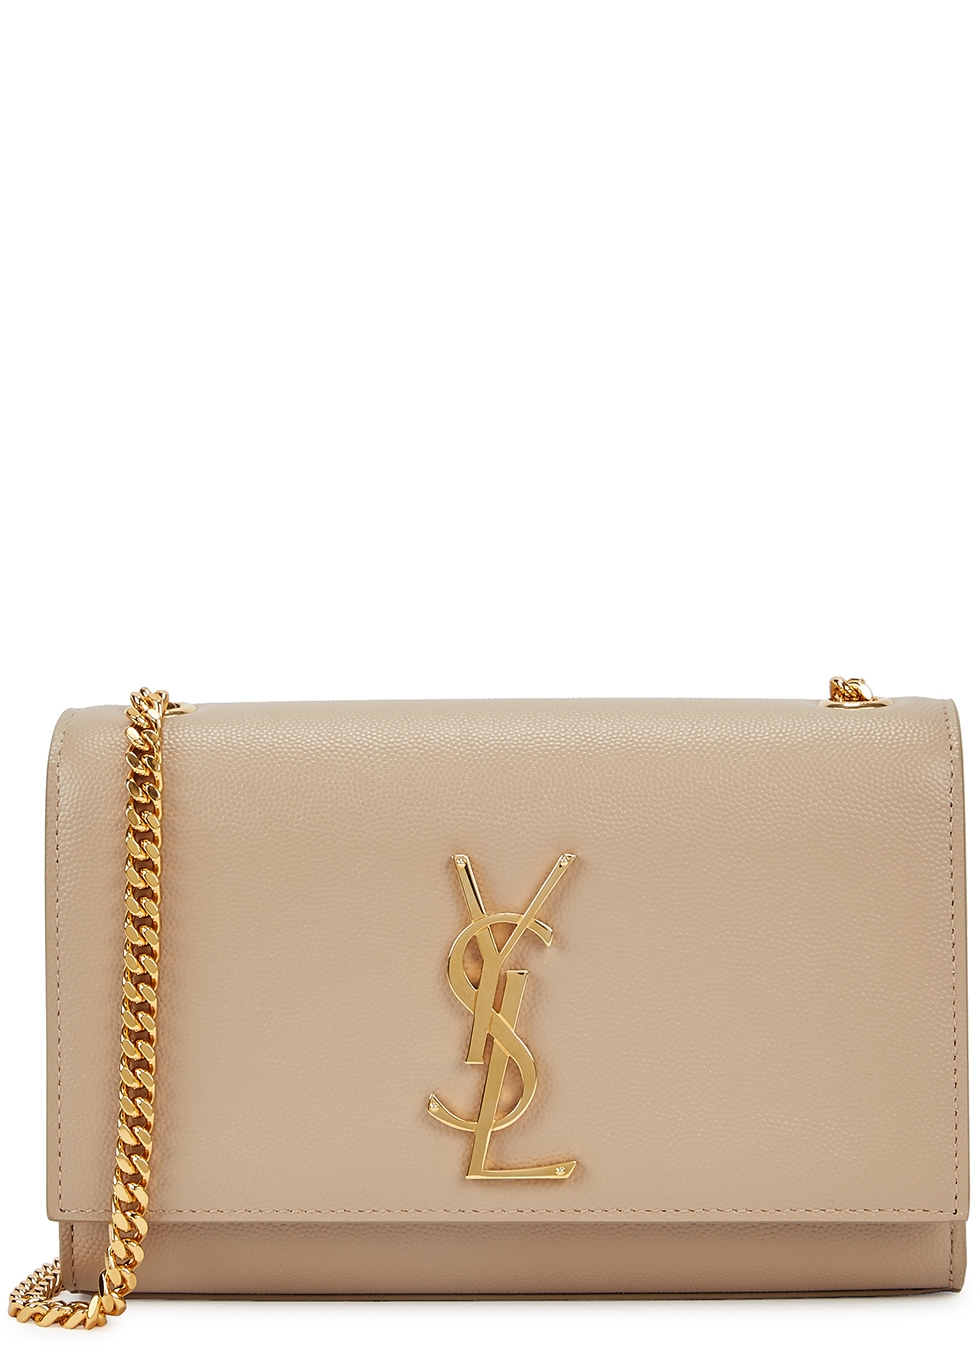 Saint Laurent Kate Small Sand Leather Shoulder Bag In Beige | ModeSens